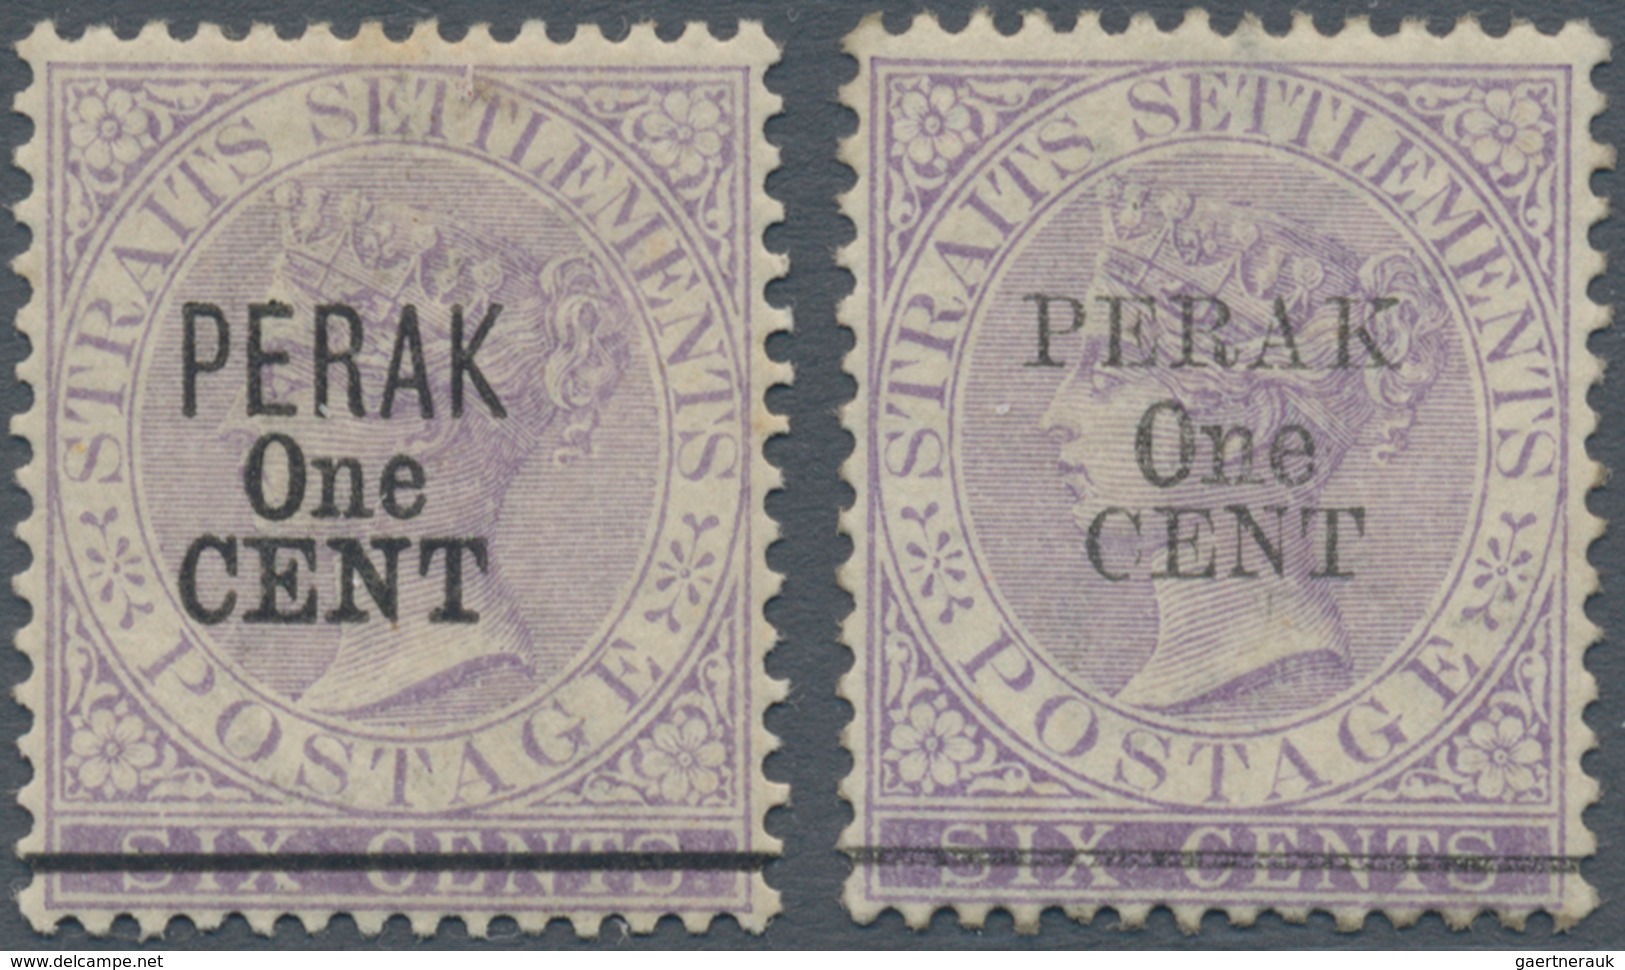 06501 Malaiische Staaten - Perak: 1891, Straits Settlements QV 6c. Lilac Wmk. Crown CA Two Stamps With Bla - Perak